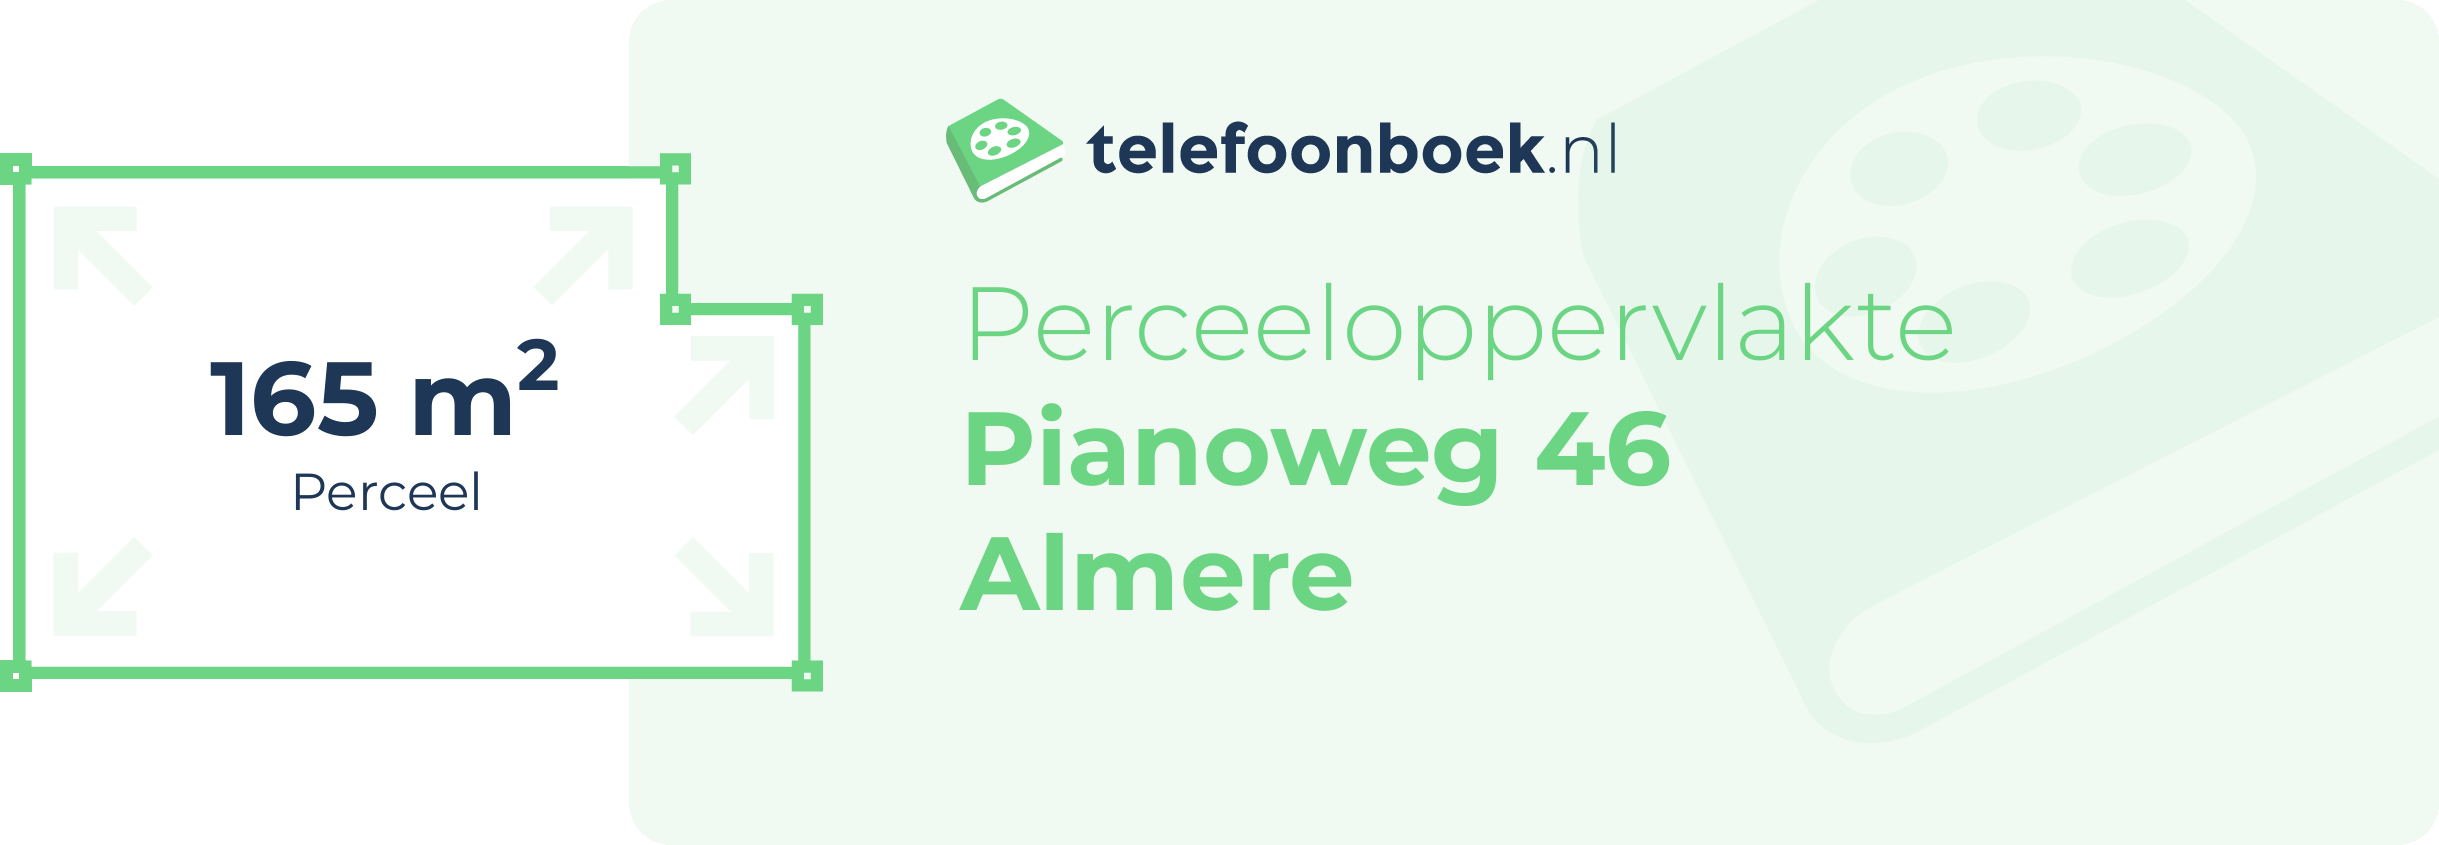 Perceeloppervlakte Pianoweg 46 Almere